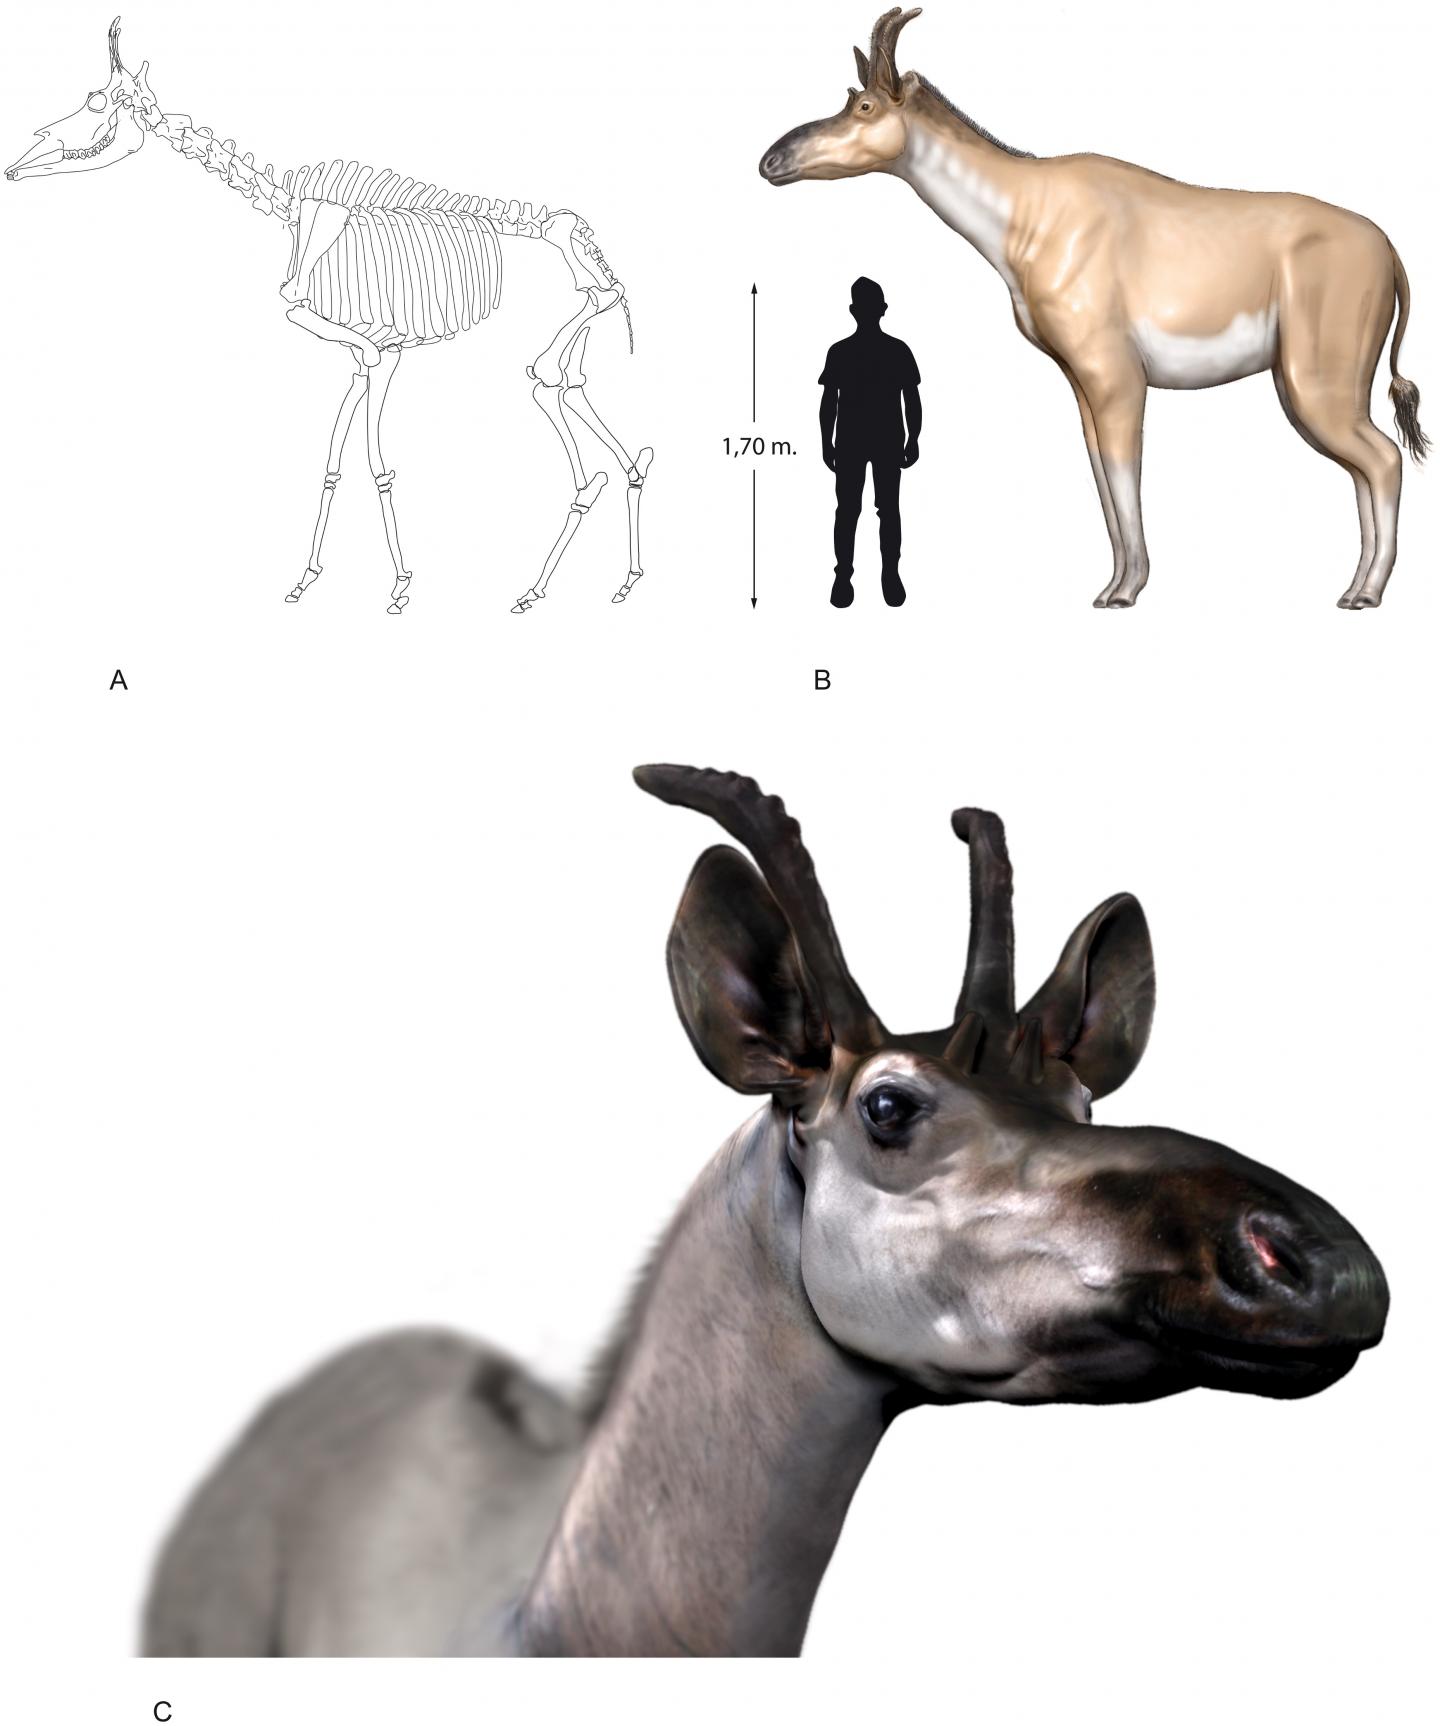 Newly Described Giraffid Species May Help Trace Evolution of Giraffe Ancestors